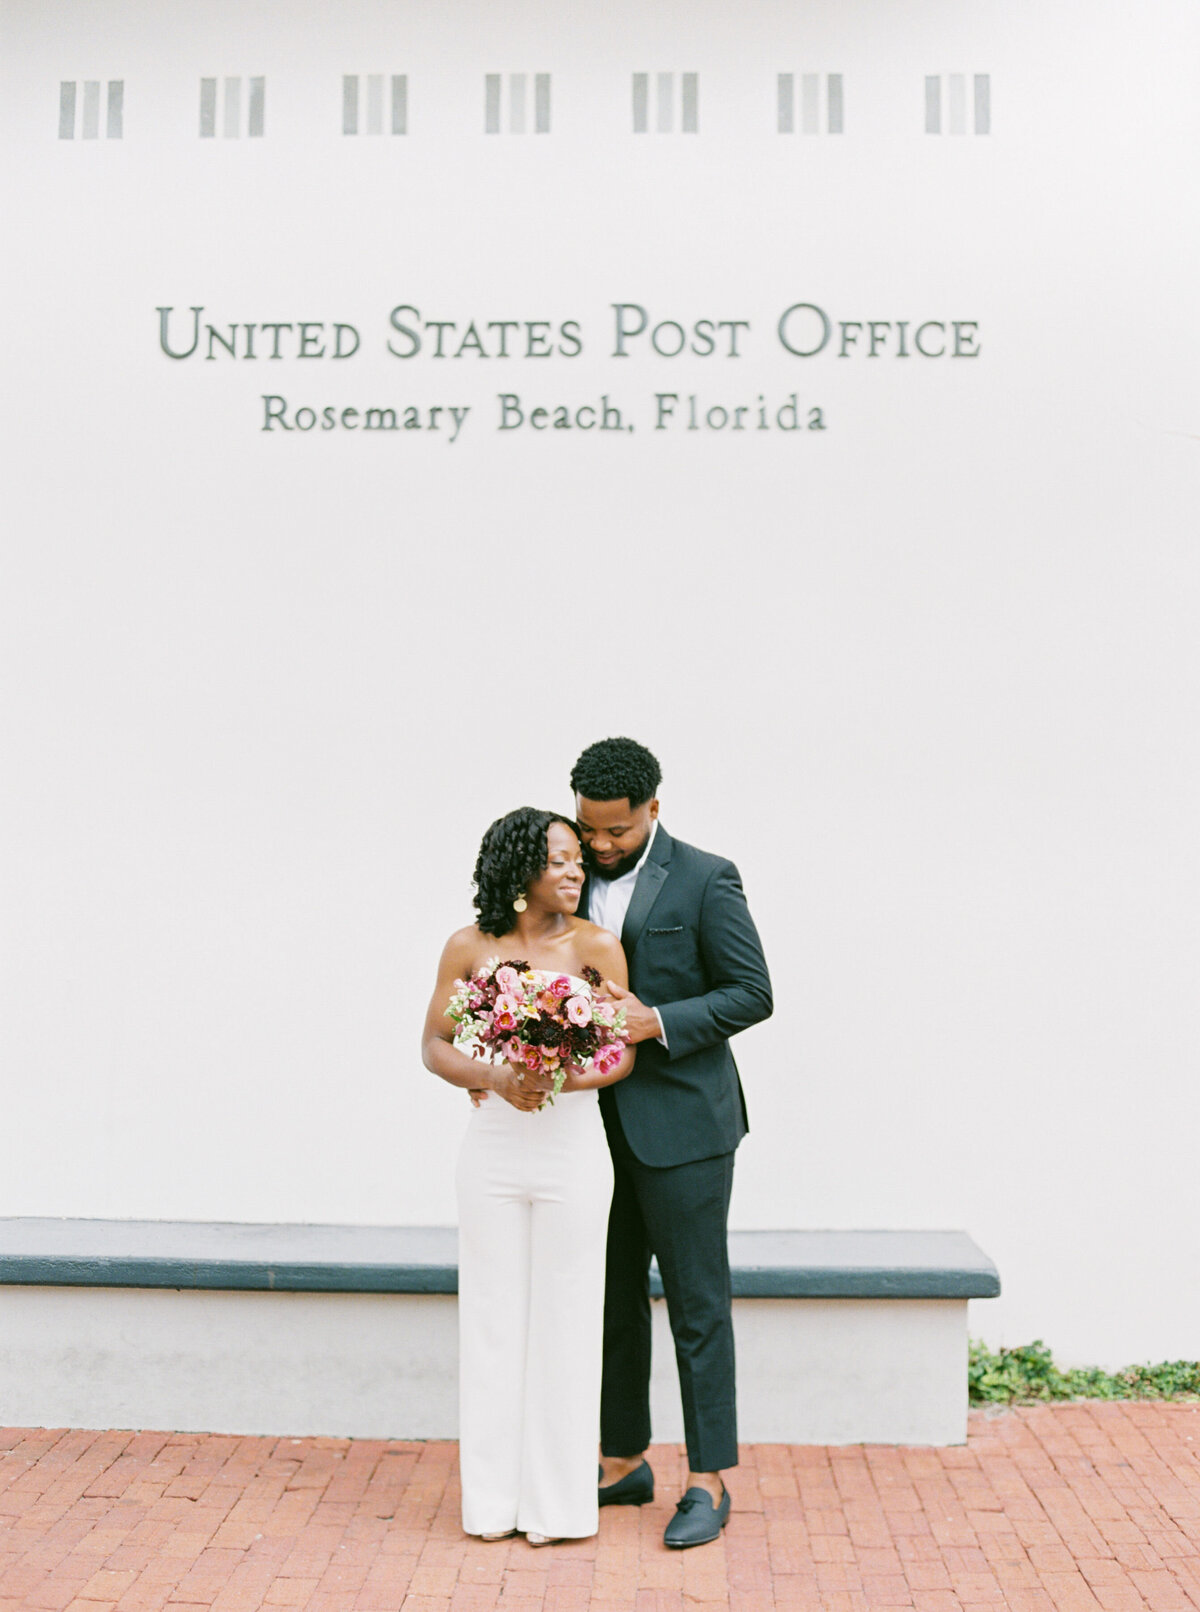 Rosemary Beach Post Office